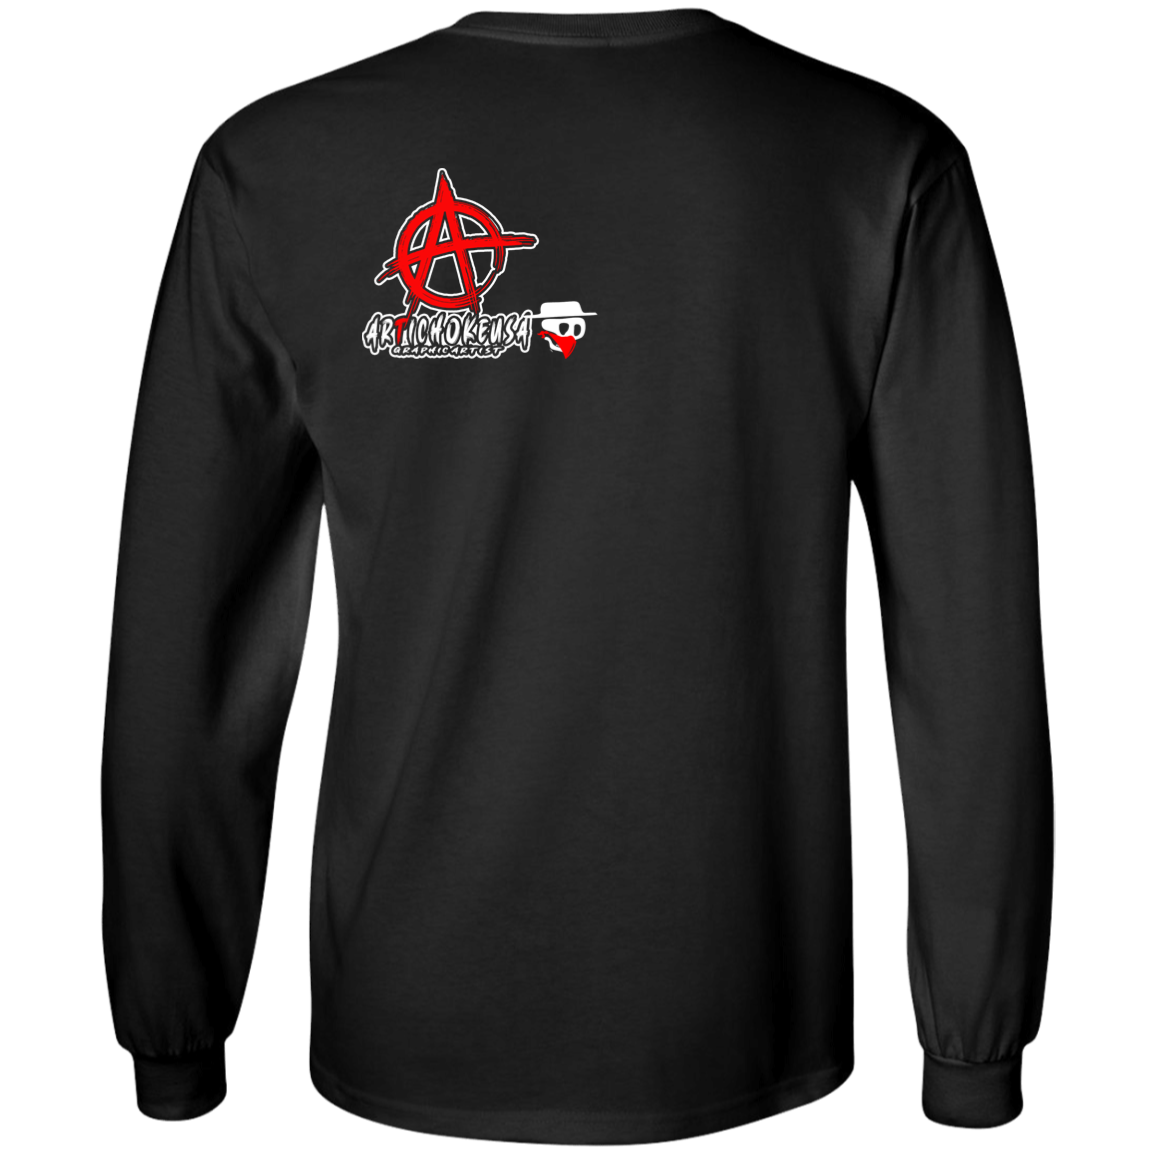 ArtichokeUSA Custom Design. Social Distancing. Social Distortion Parody. 100% Cotton Long Sleeve T-Shirt